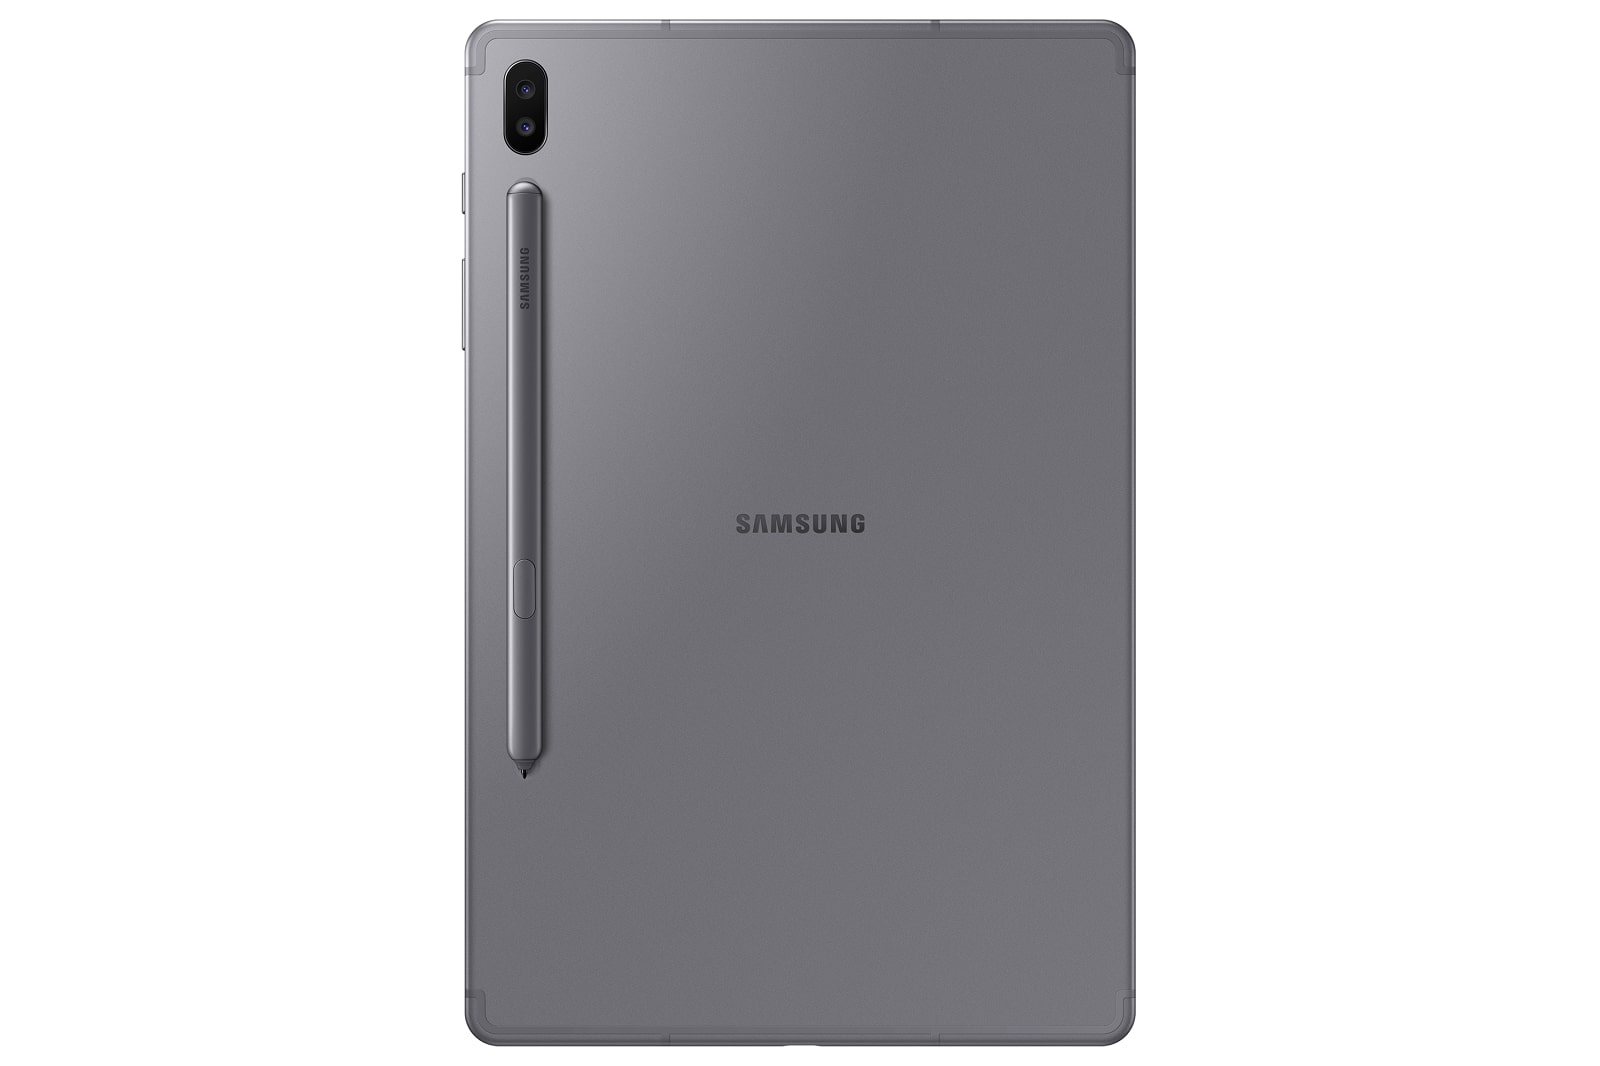 Galaxy Tab S6 "width =" 1600 "height =" 1066 "srcset =" https://www.techbyte.ie/wp-content/uploads/2019/07/Samsung-Galaxy-Tab-S6.jpg 1600w, https://www.techbyte.sk/wp-content/uploads/2019/07/Samsung-Galaxy-Tab-S6-768x512.jpg 768w, https://www.techbyte.sk/wp-content/uploads/2019/07/Samsung-Galaxy-Tab-S6-696x464.jpg 696w, https://www.techbyte.sk/wp-content/uploads/2019/07/Samsung-Galaxy-Tab-S6-1068x712.jpg 1068w, https://www.techbyte.sk/wp-content/uploads/2019/07/Samsung-Galaxy-Tab-S6-630x420.jpg 630w, https://www.techbyte.sk/wp-content/uploads/2019/07/Samsung-Galaxy-Tab-S6-800x533.jpg 800w "size =" (max-width: 1600px) 100w, 1600px